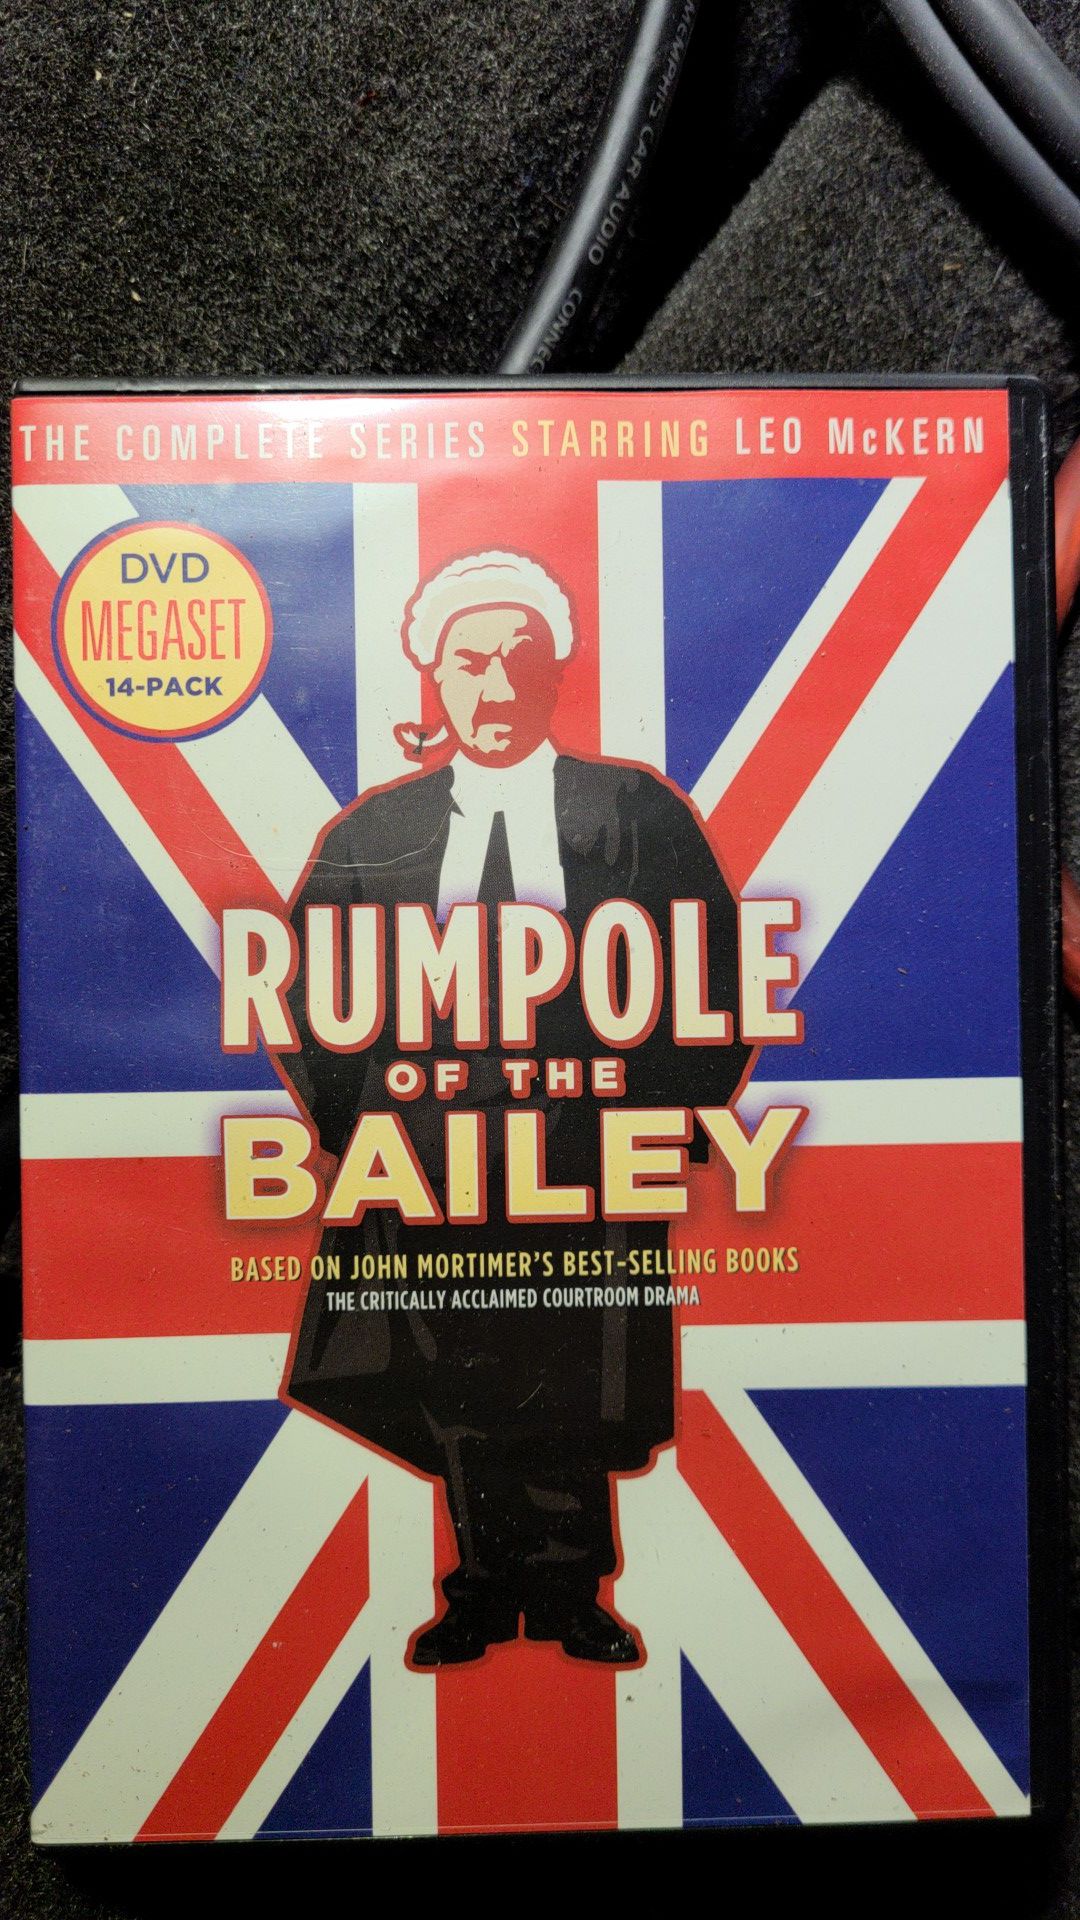 Rumpole of the Bailey DVD megaset 14-pack